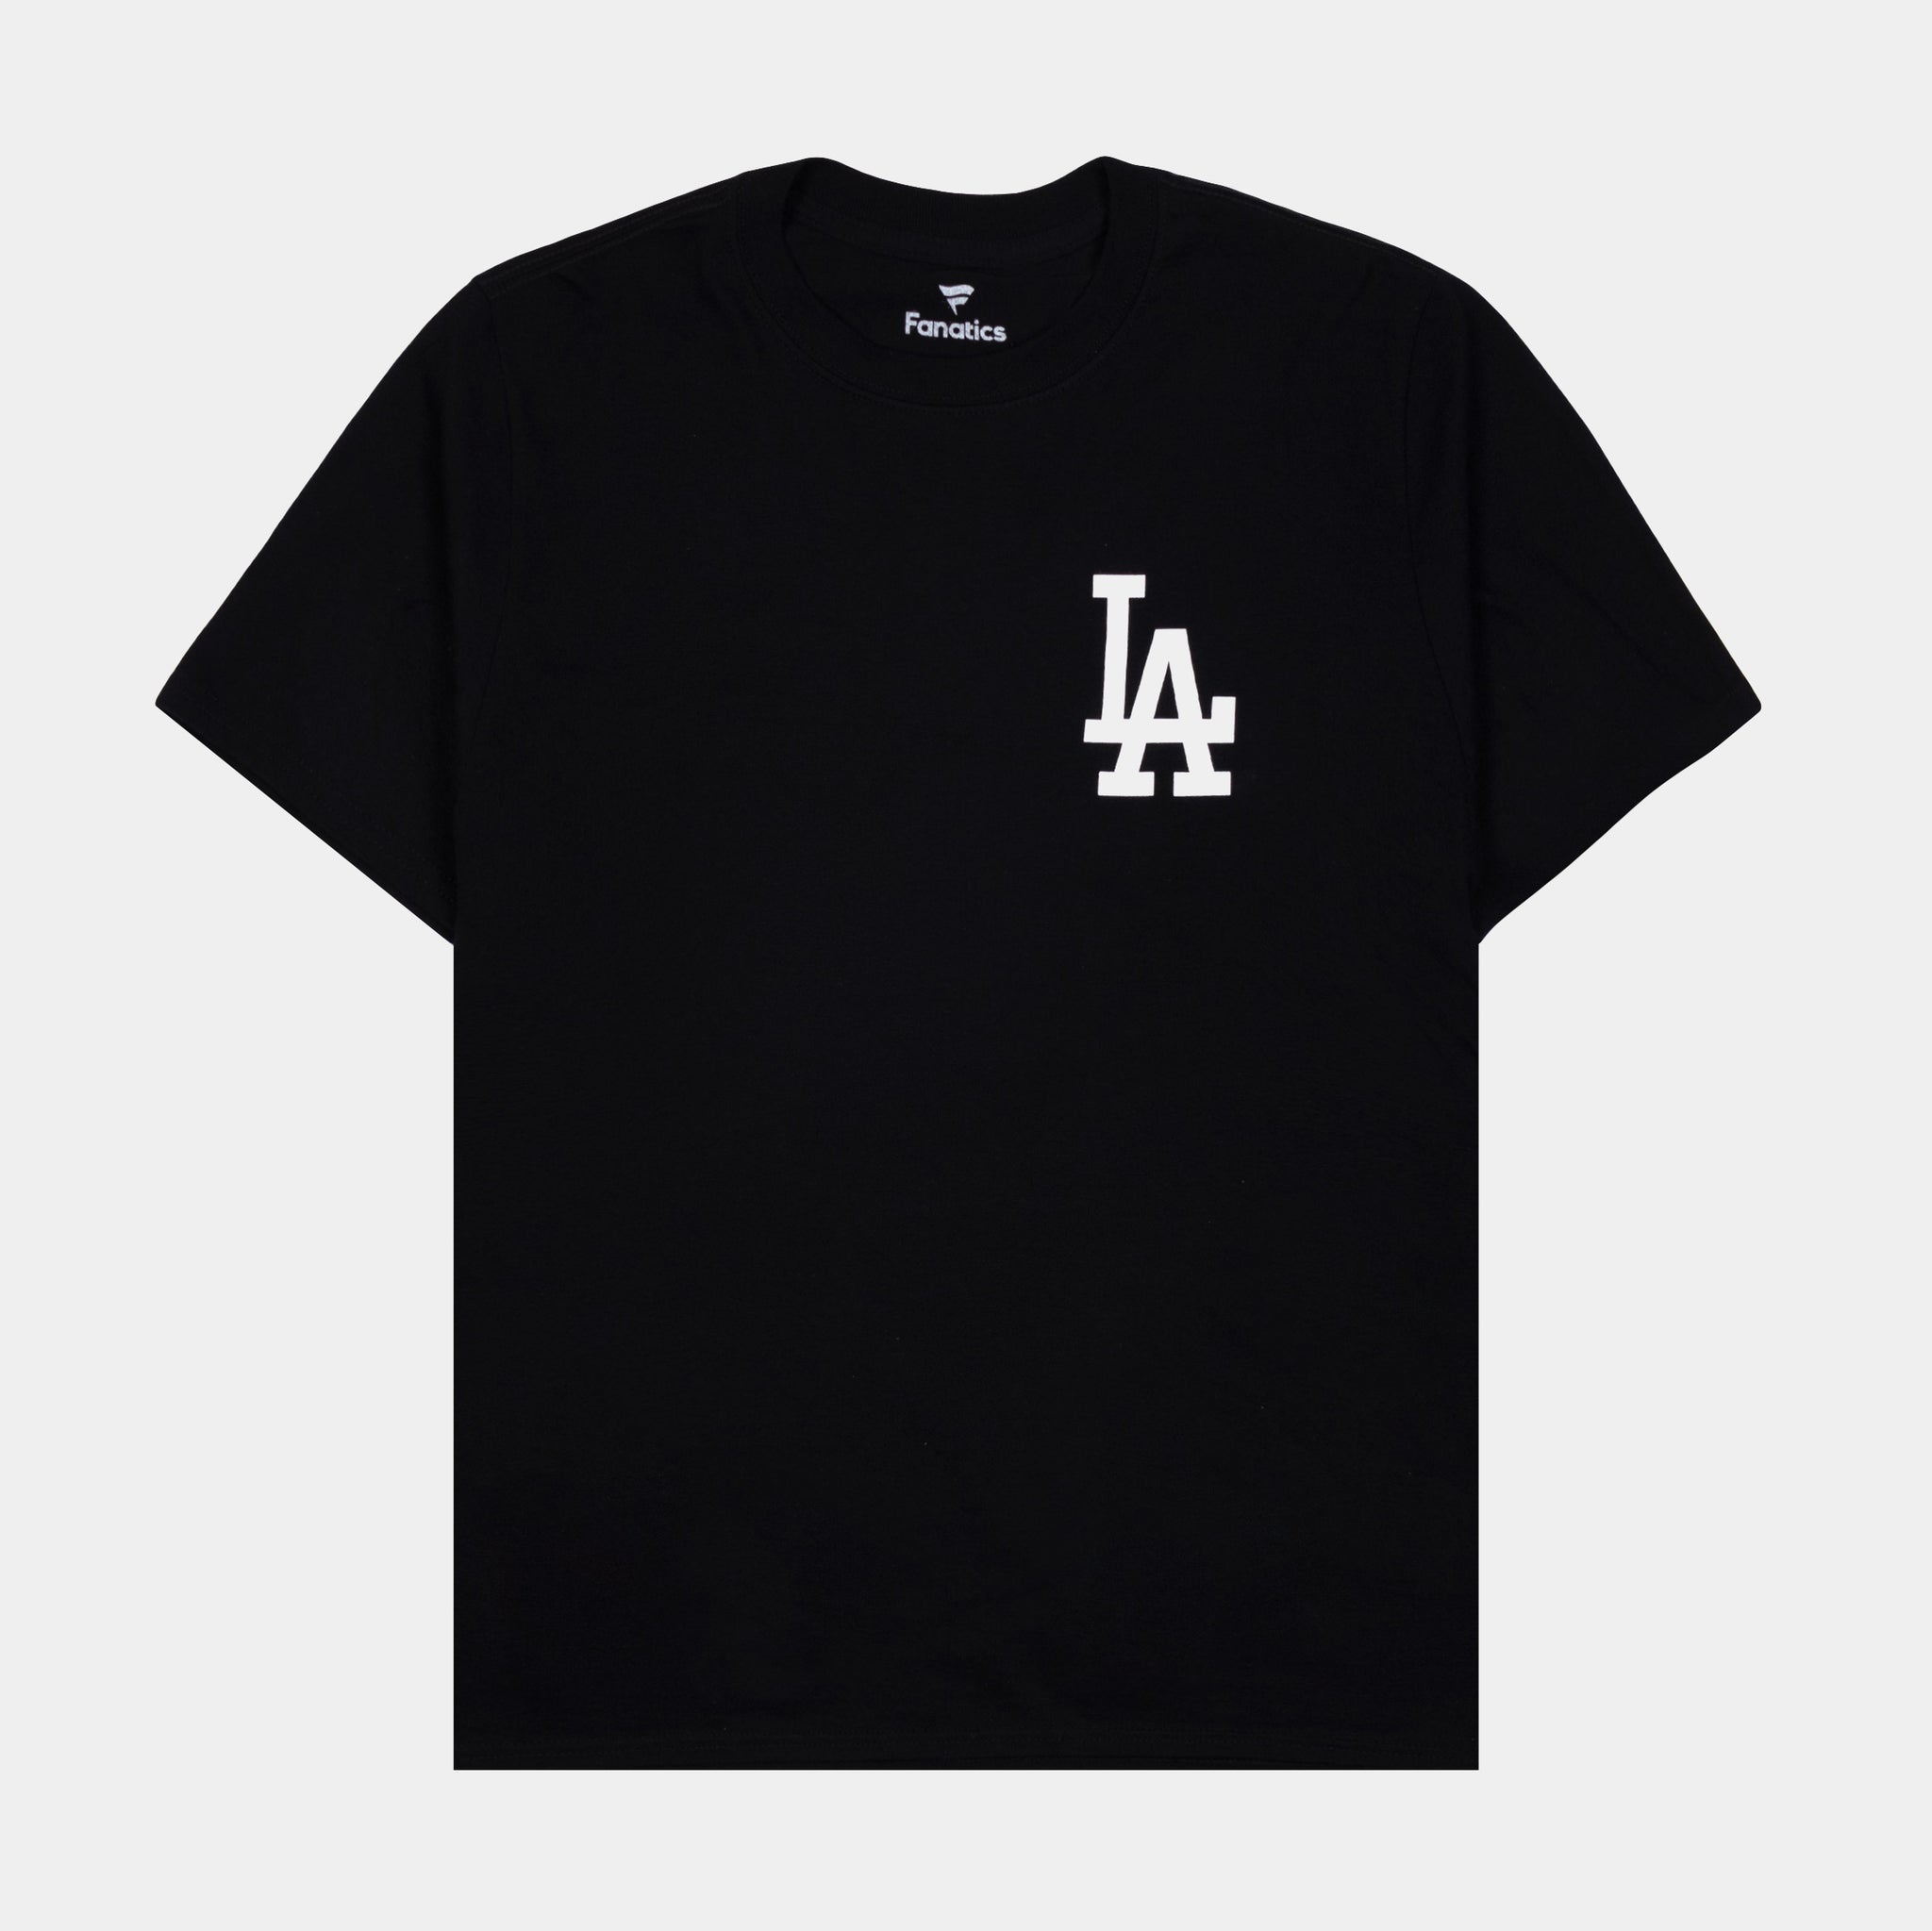 Nike, Shirts, Los Angeles Dodgers Blue Nike T Shirt Regular Xxl